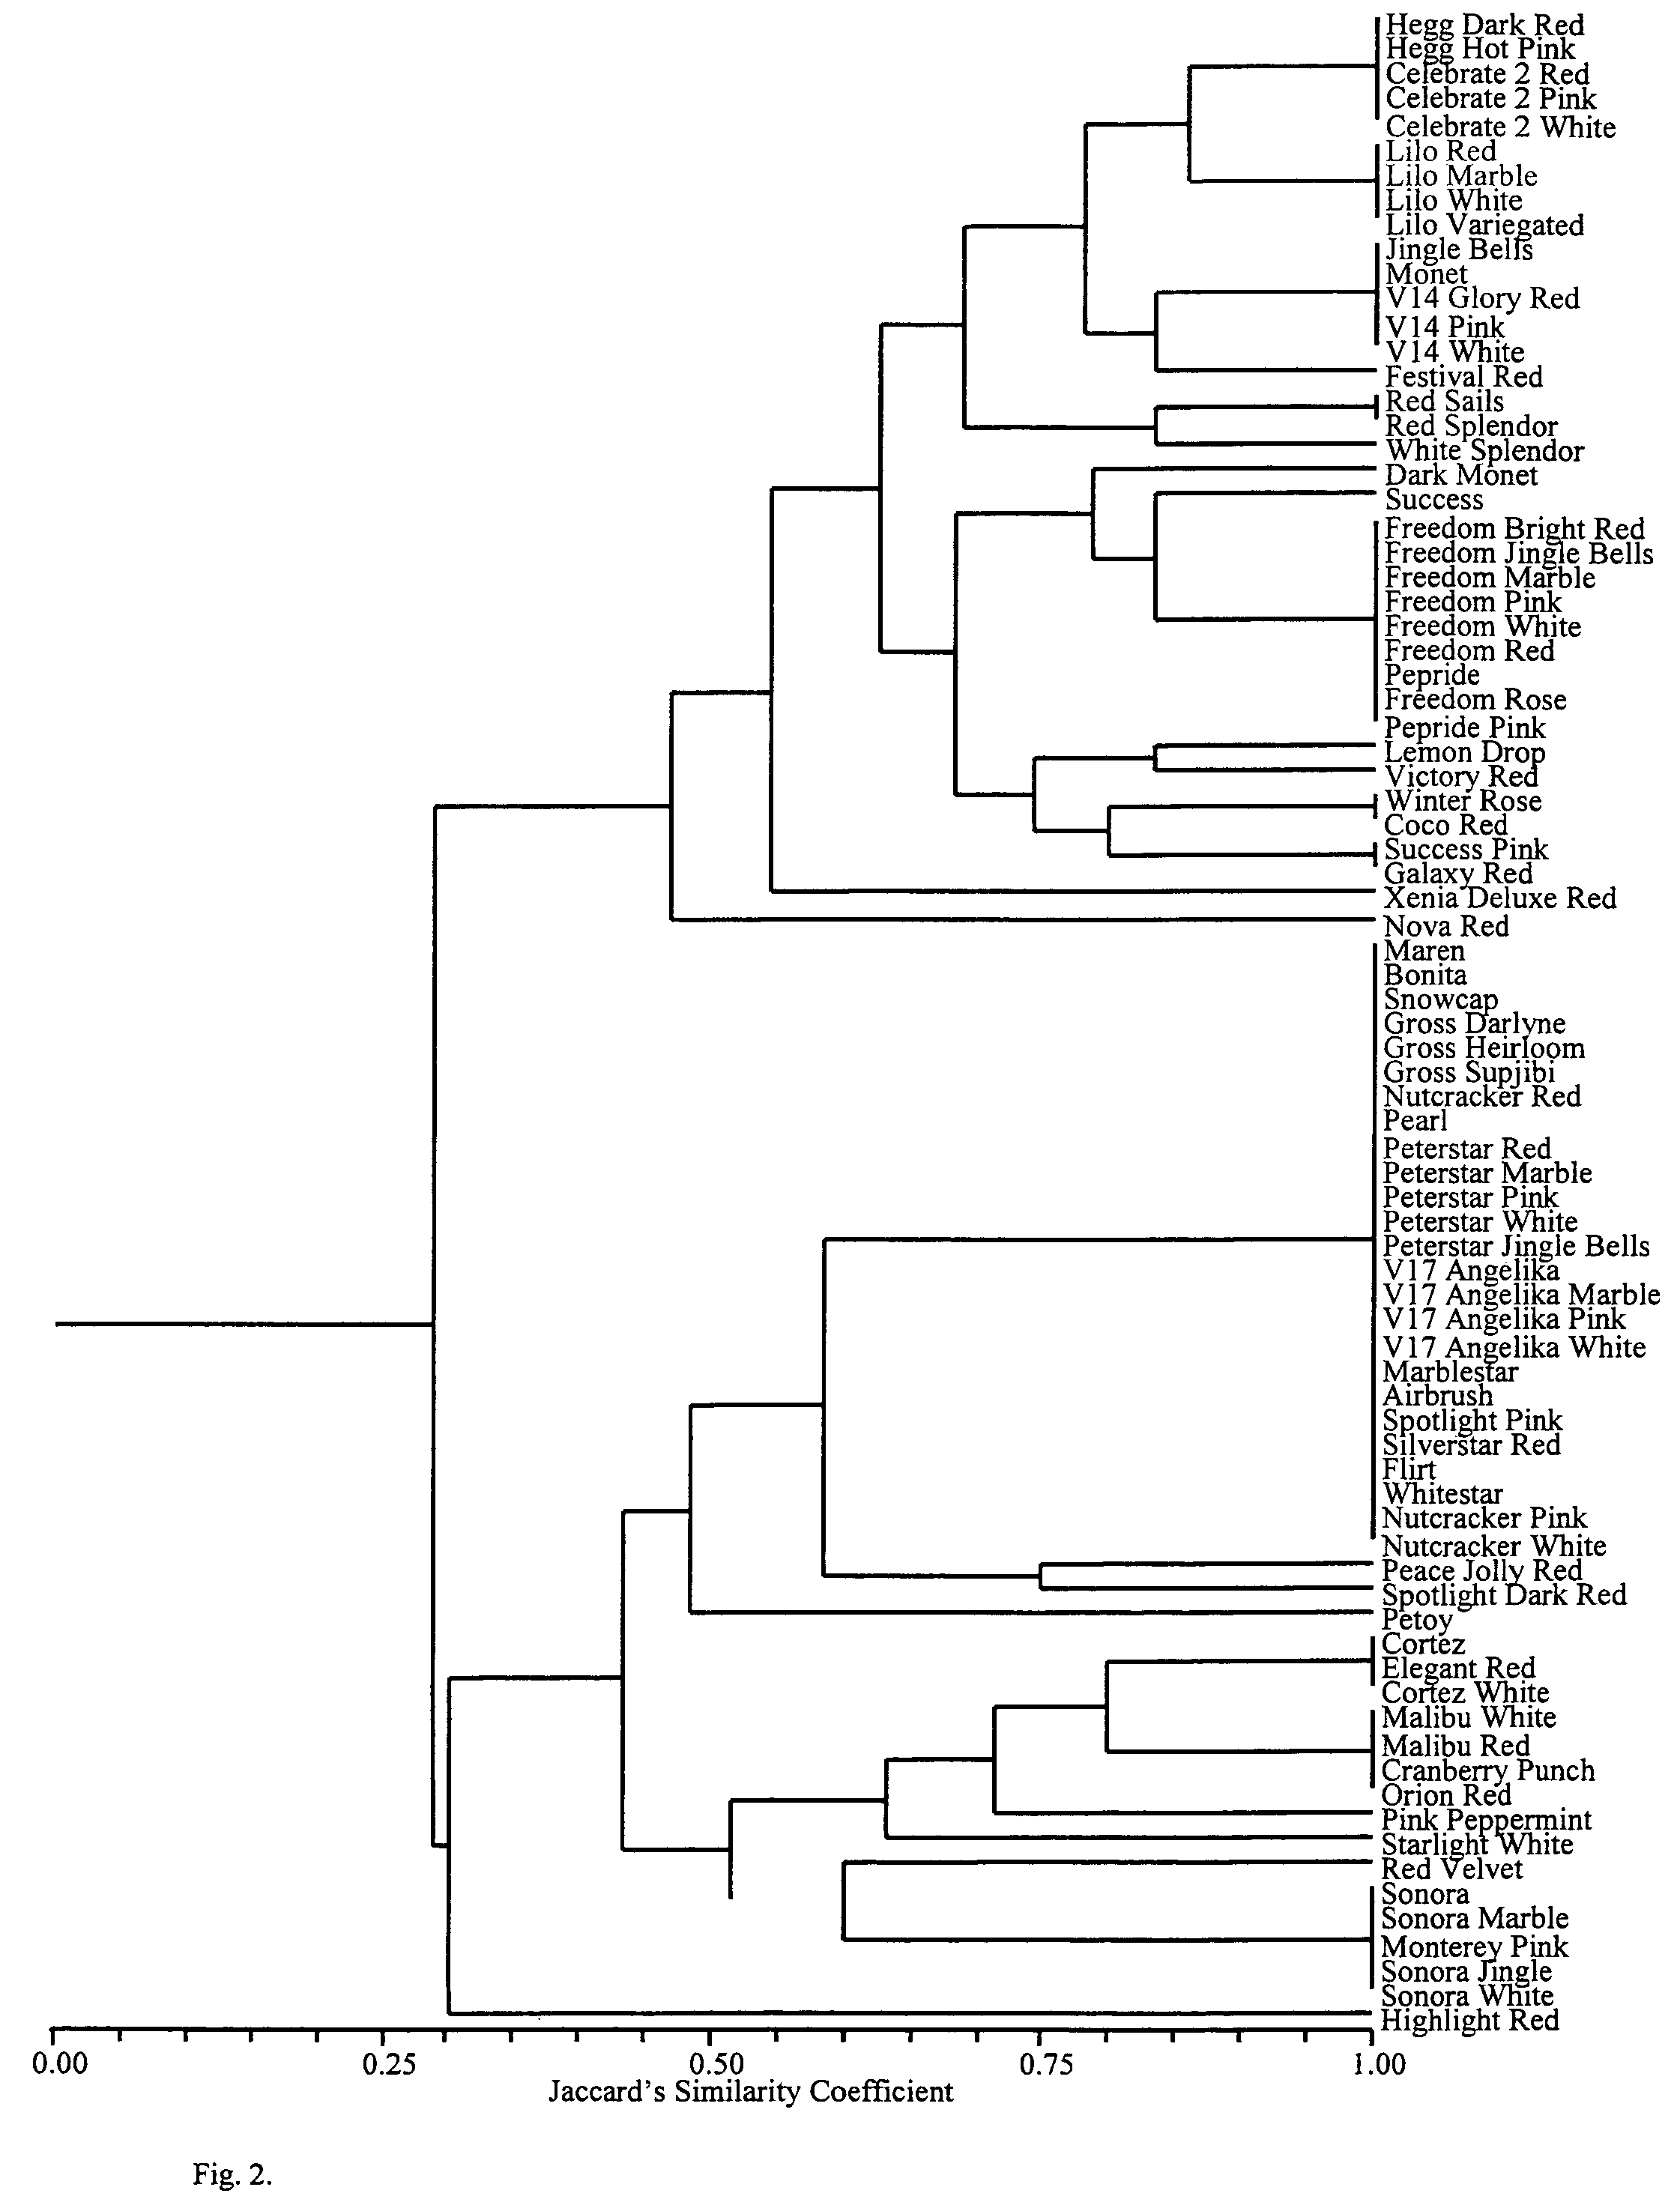 Identification of poinsettia cultivars